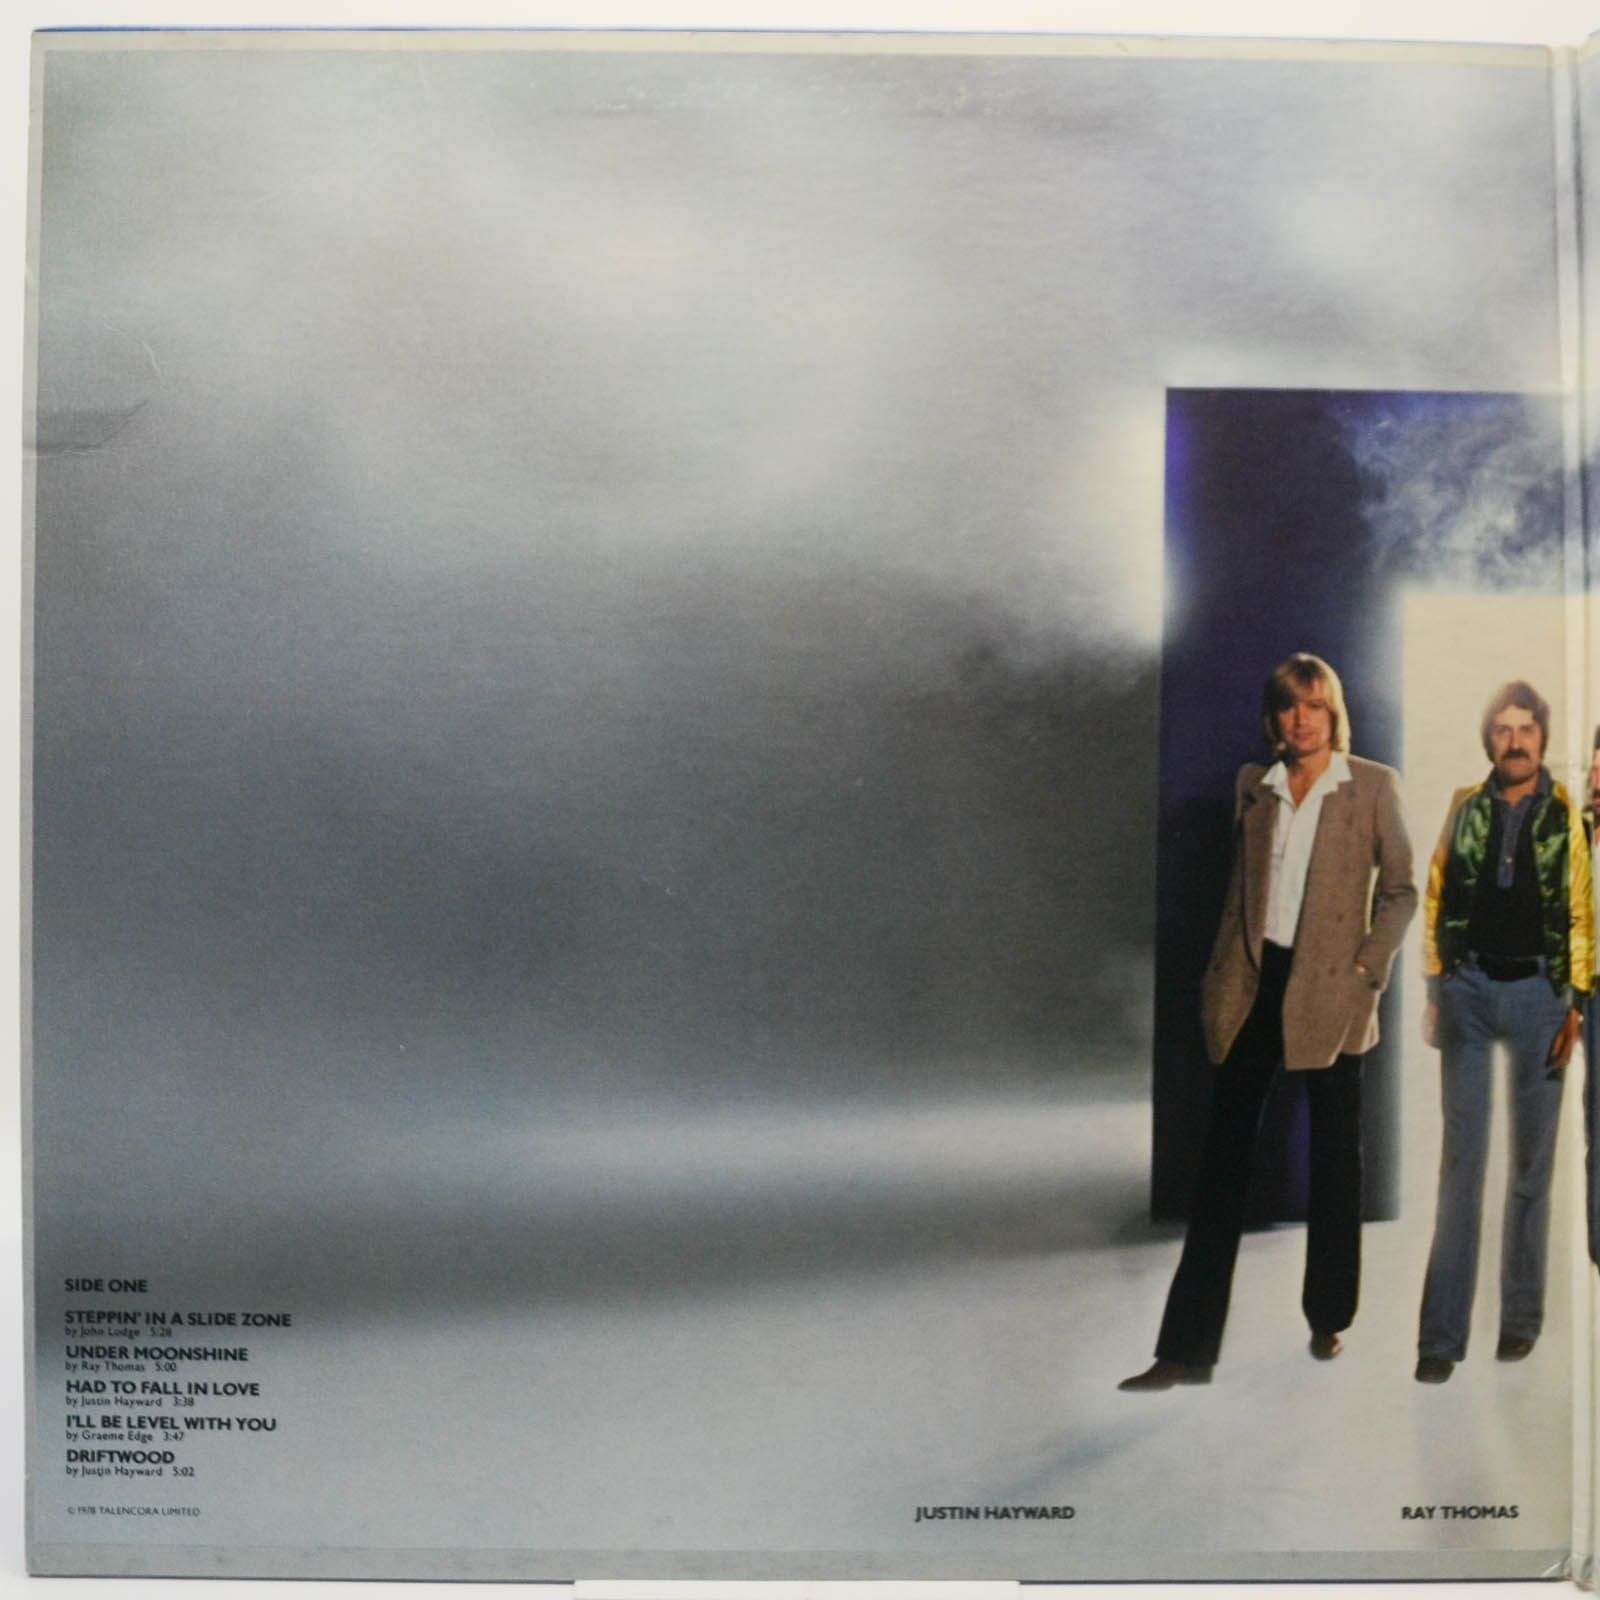 Moody Blues — Octave, 1978